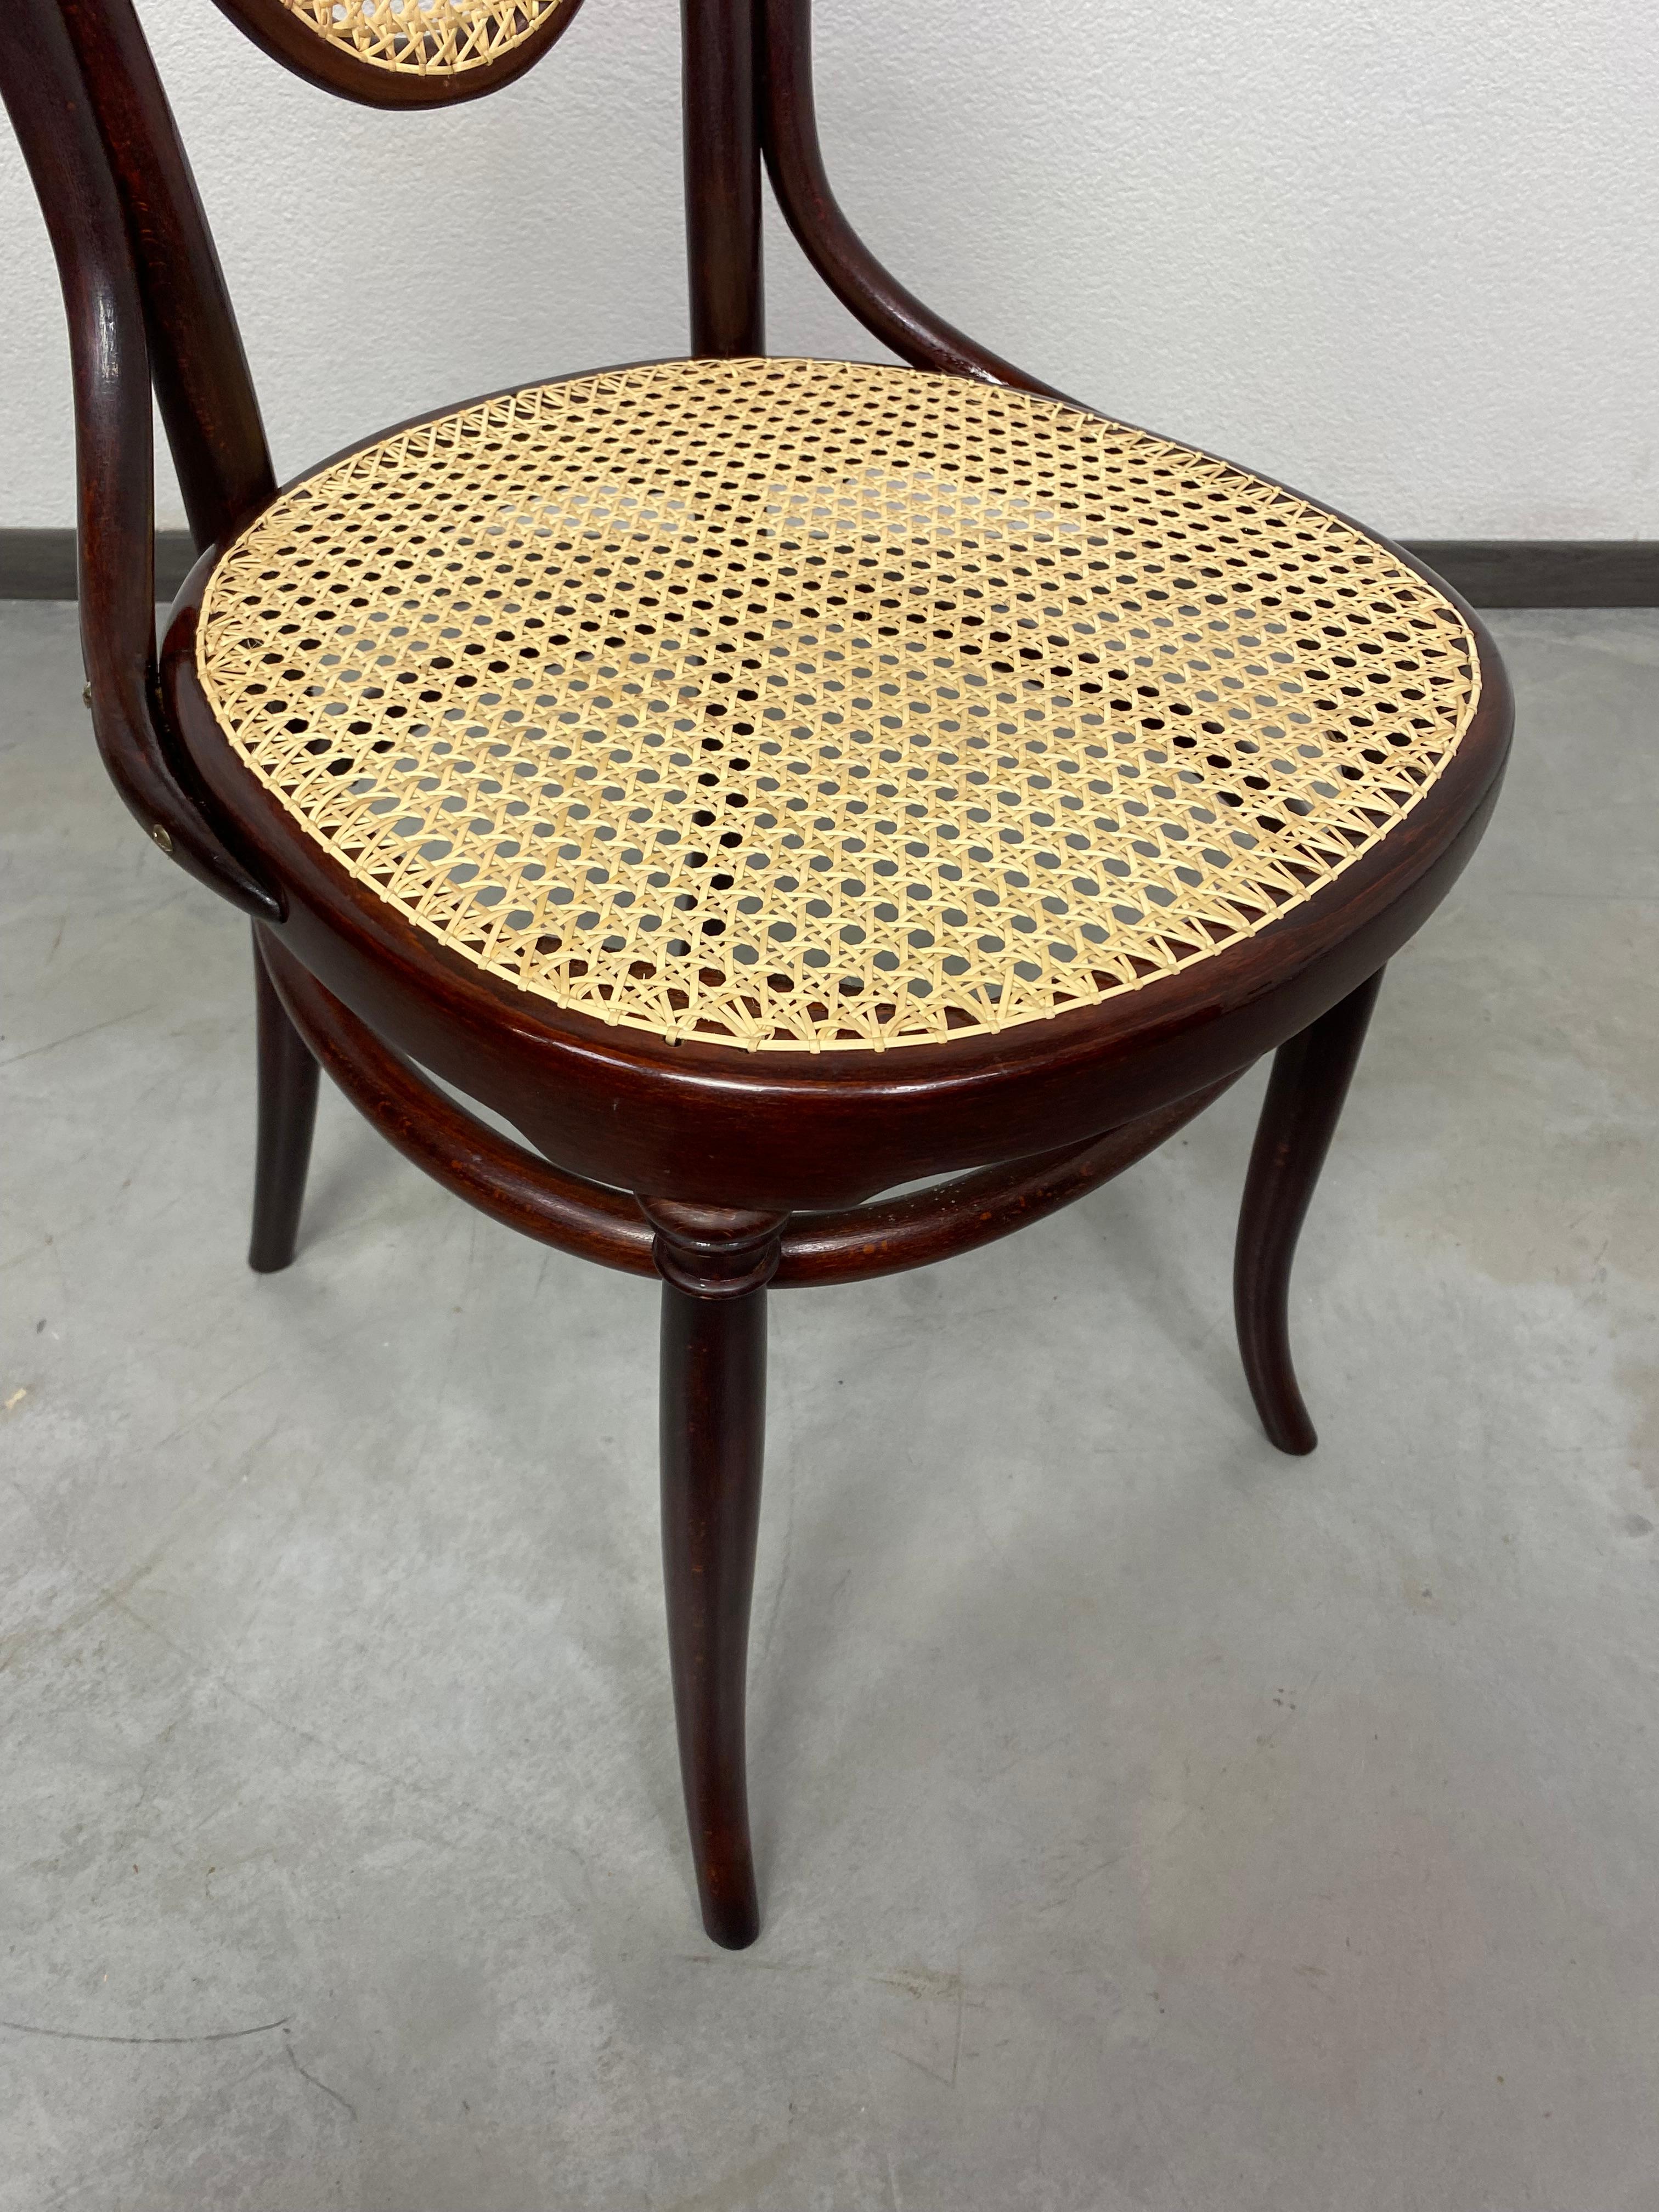 Bentwood dining room chair no.33 by J&J Kohn In Excellent Condition For Sale In Banská Štiavnica, SK